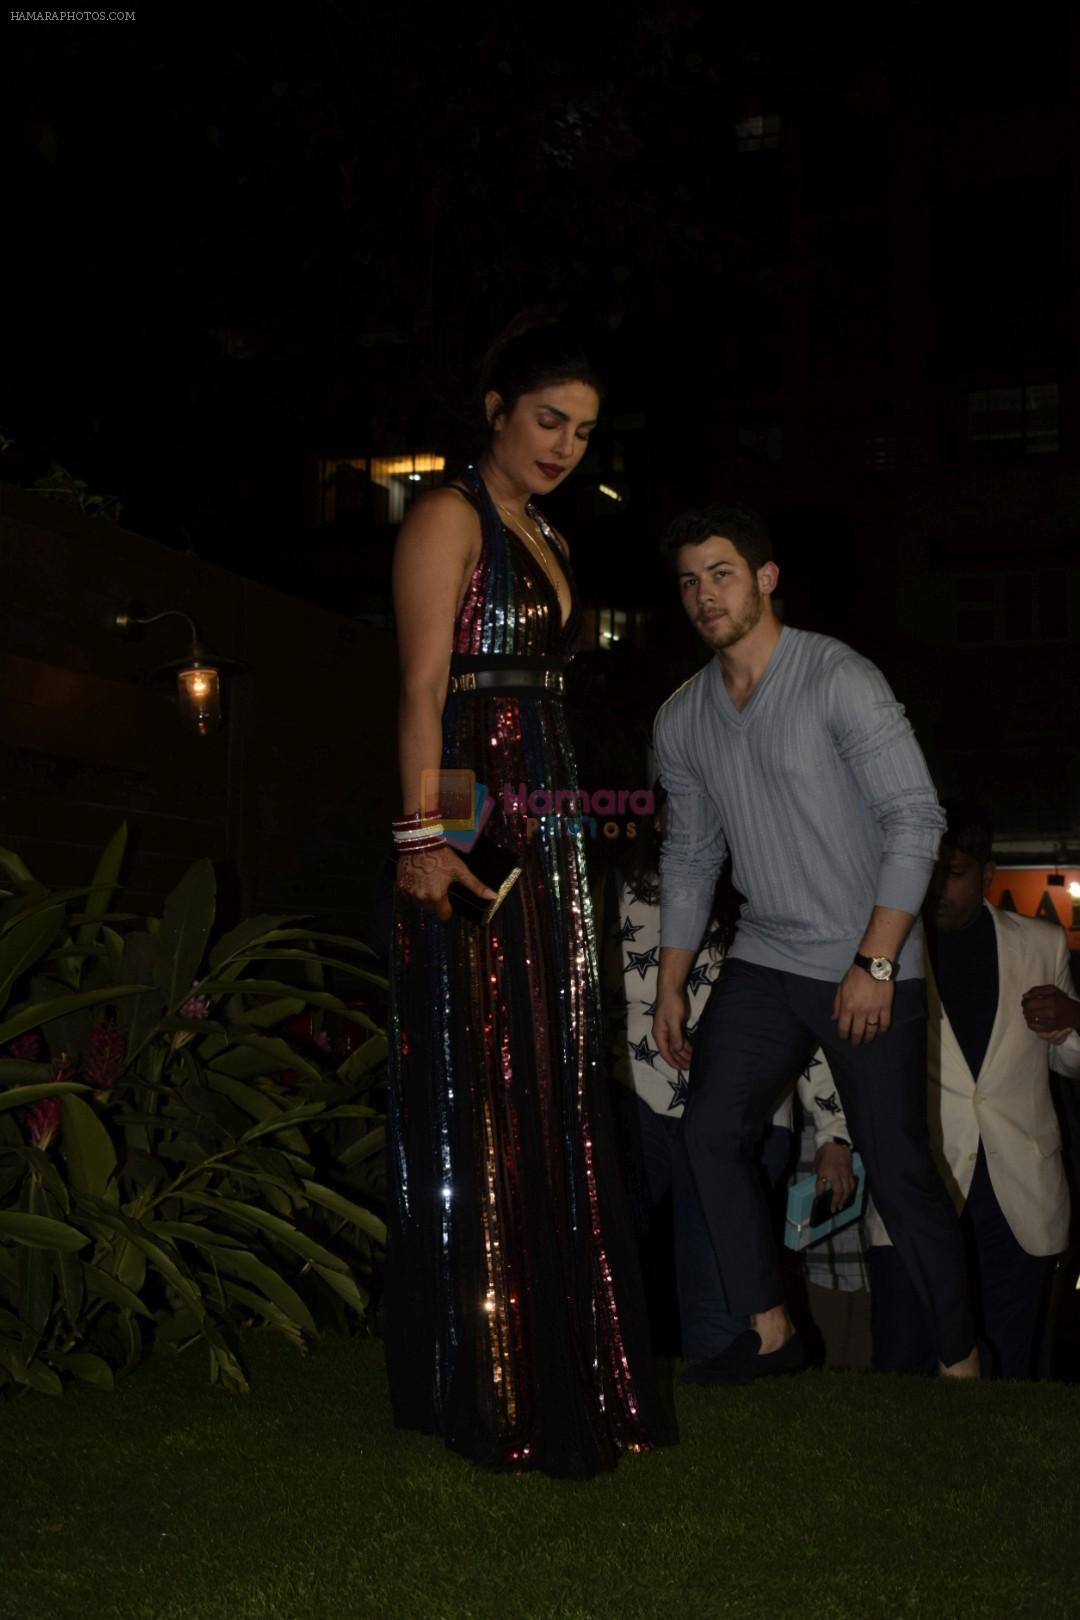 Priyanka Chopra, Nick Jonas at the launch of Bumble at Soho House in juhu on 7th Dec 2018